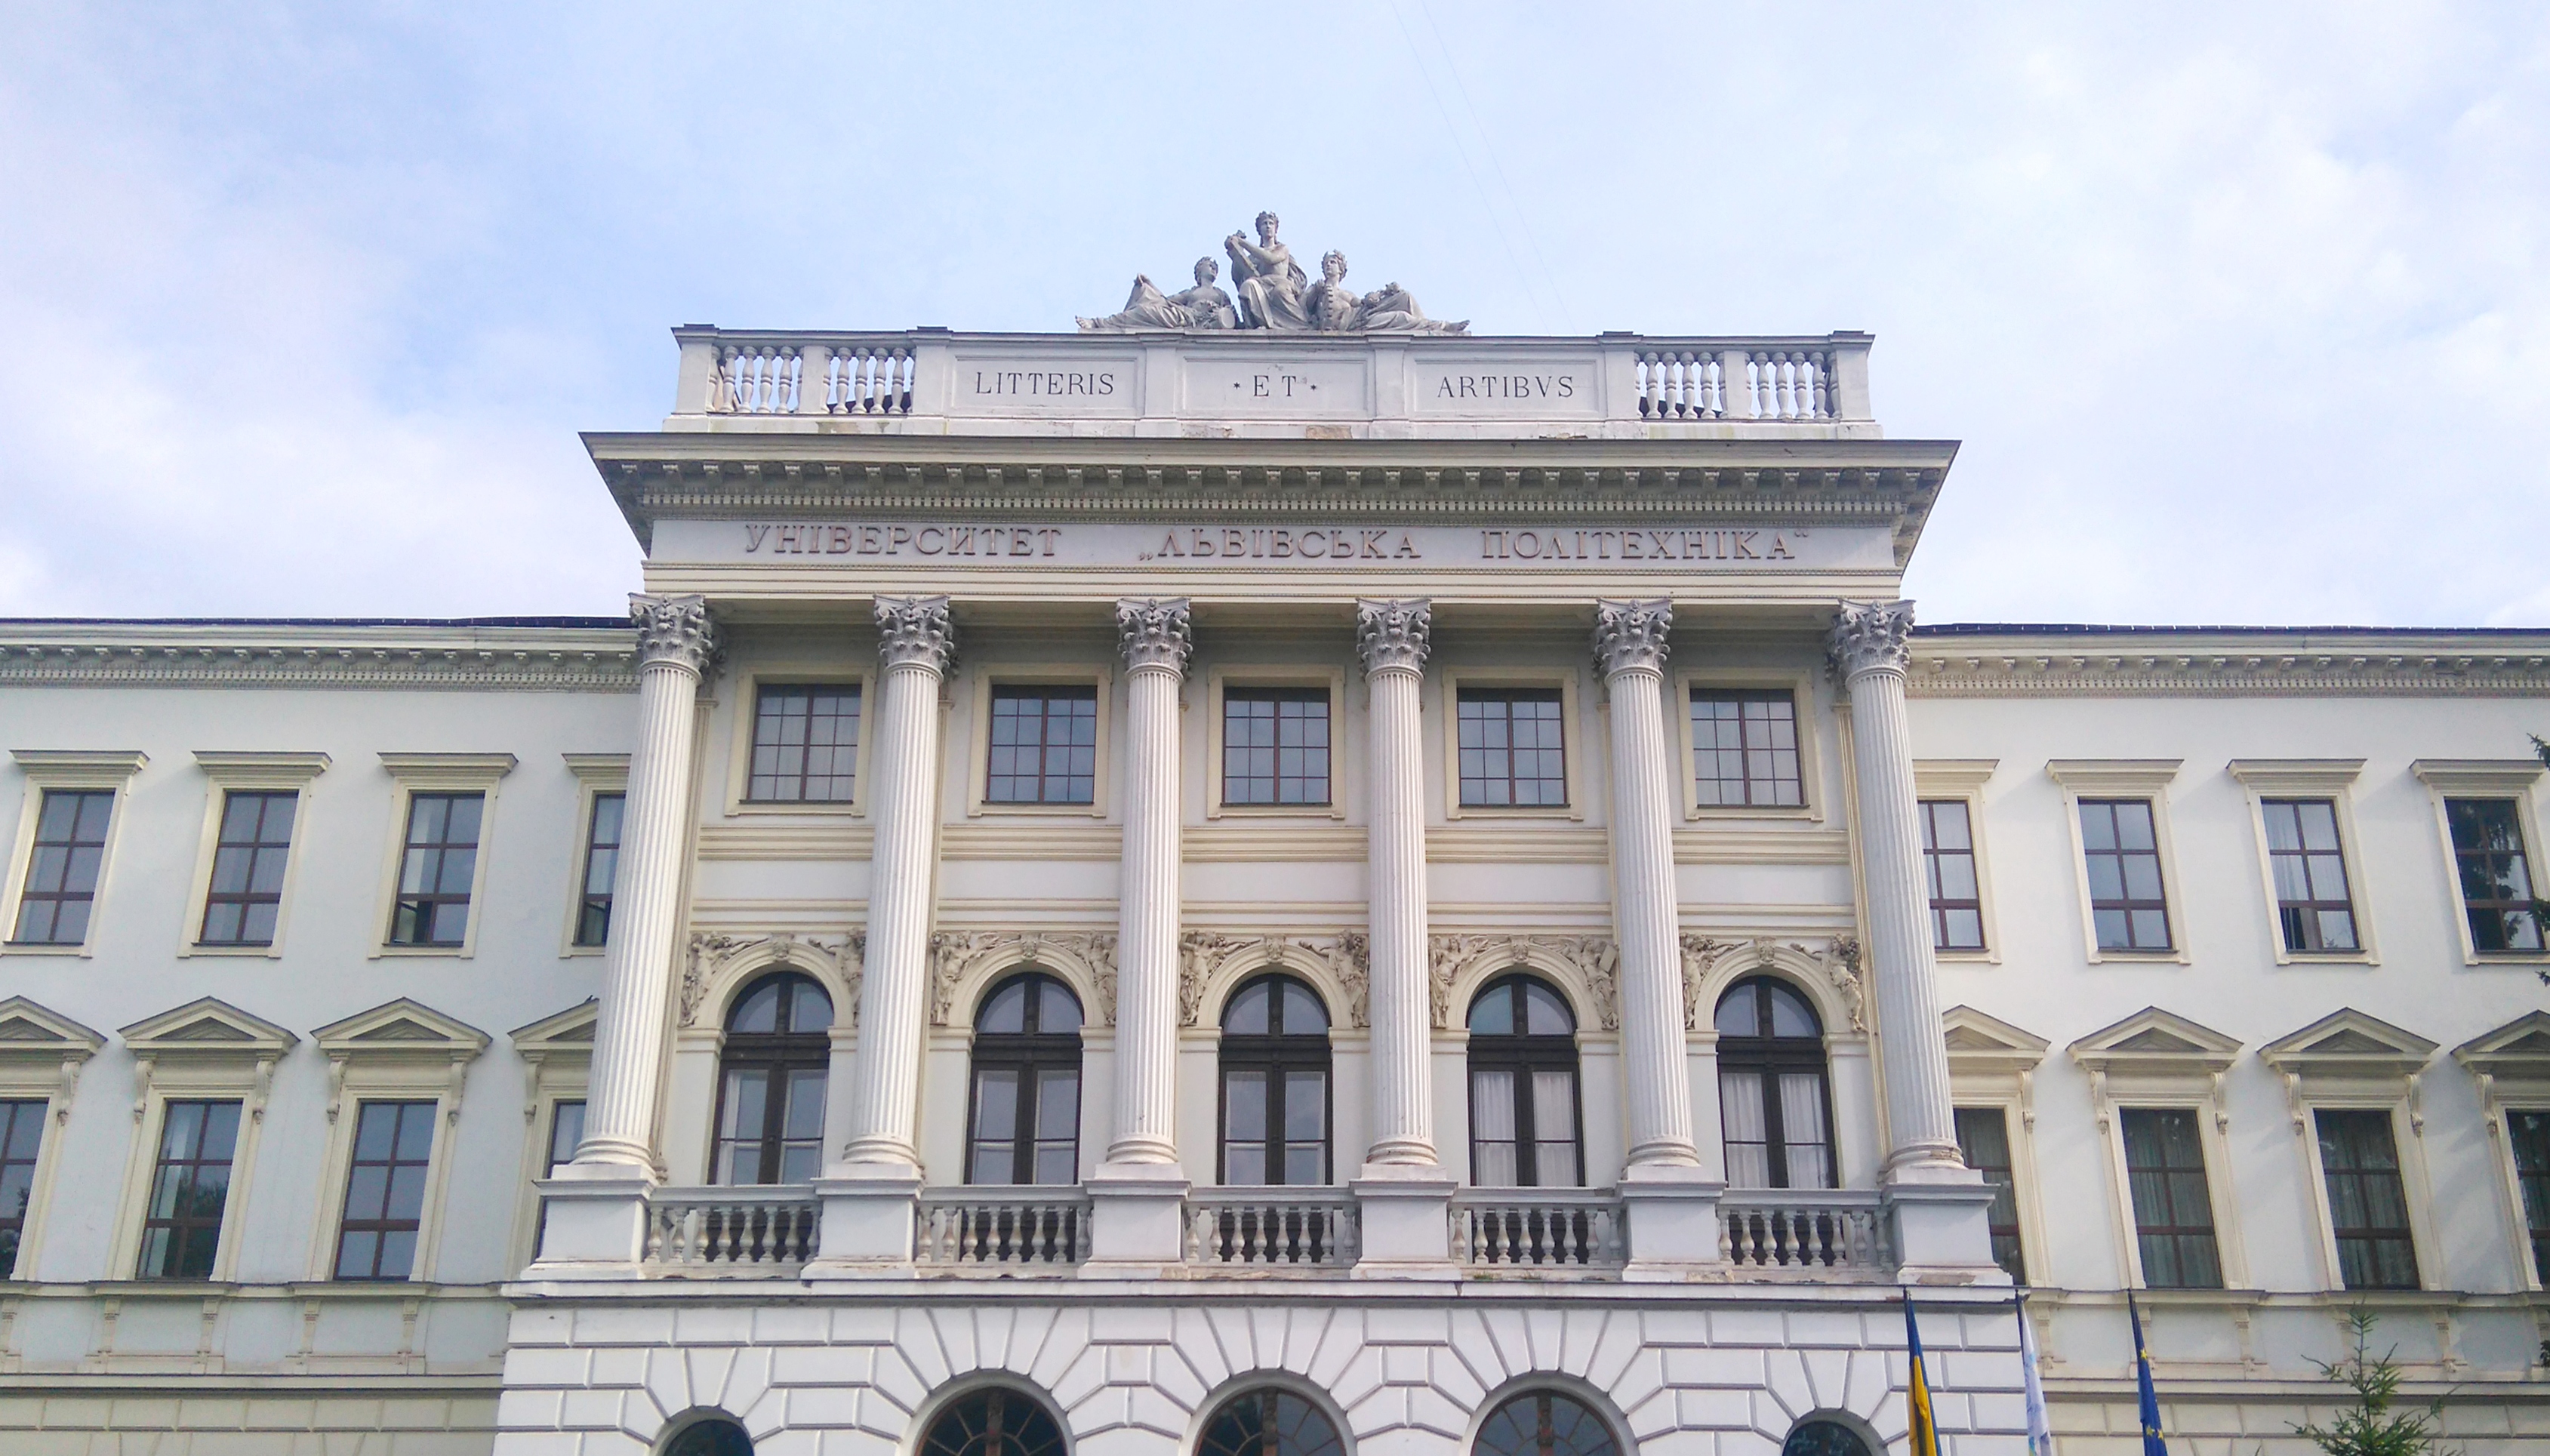 Facade of the main building of Lviv Polytechnic